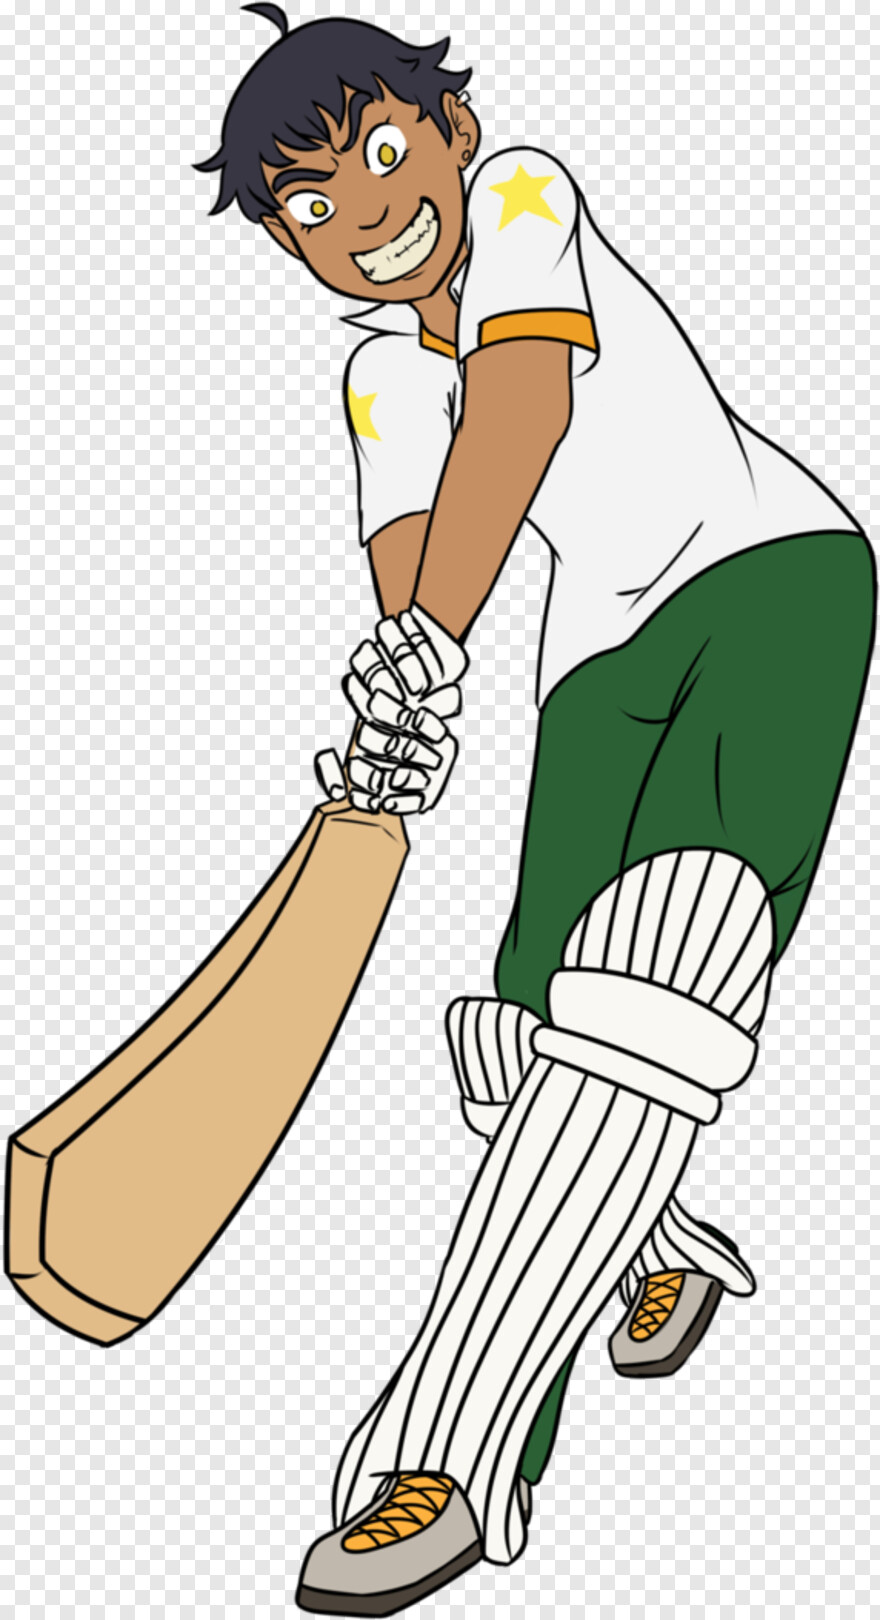  Cricket Vector, Cricket Cup, Cricket Bat And Ball, Cricket Images, Cricket Clipart, Cricket Kit